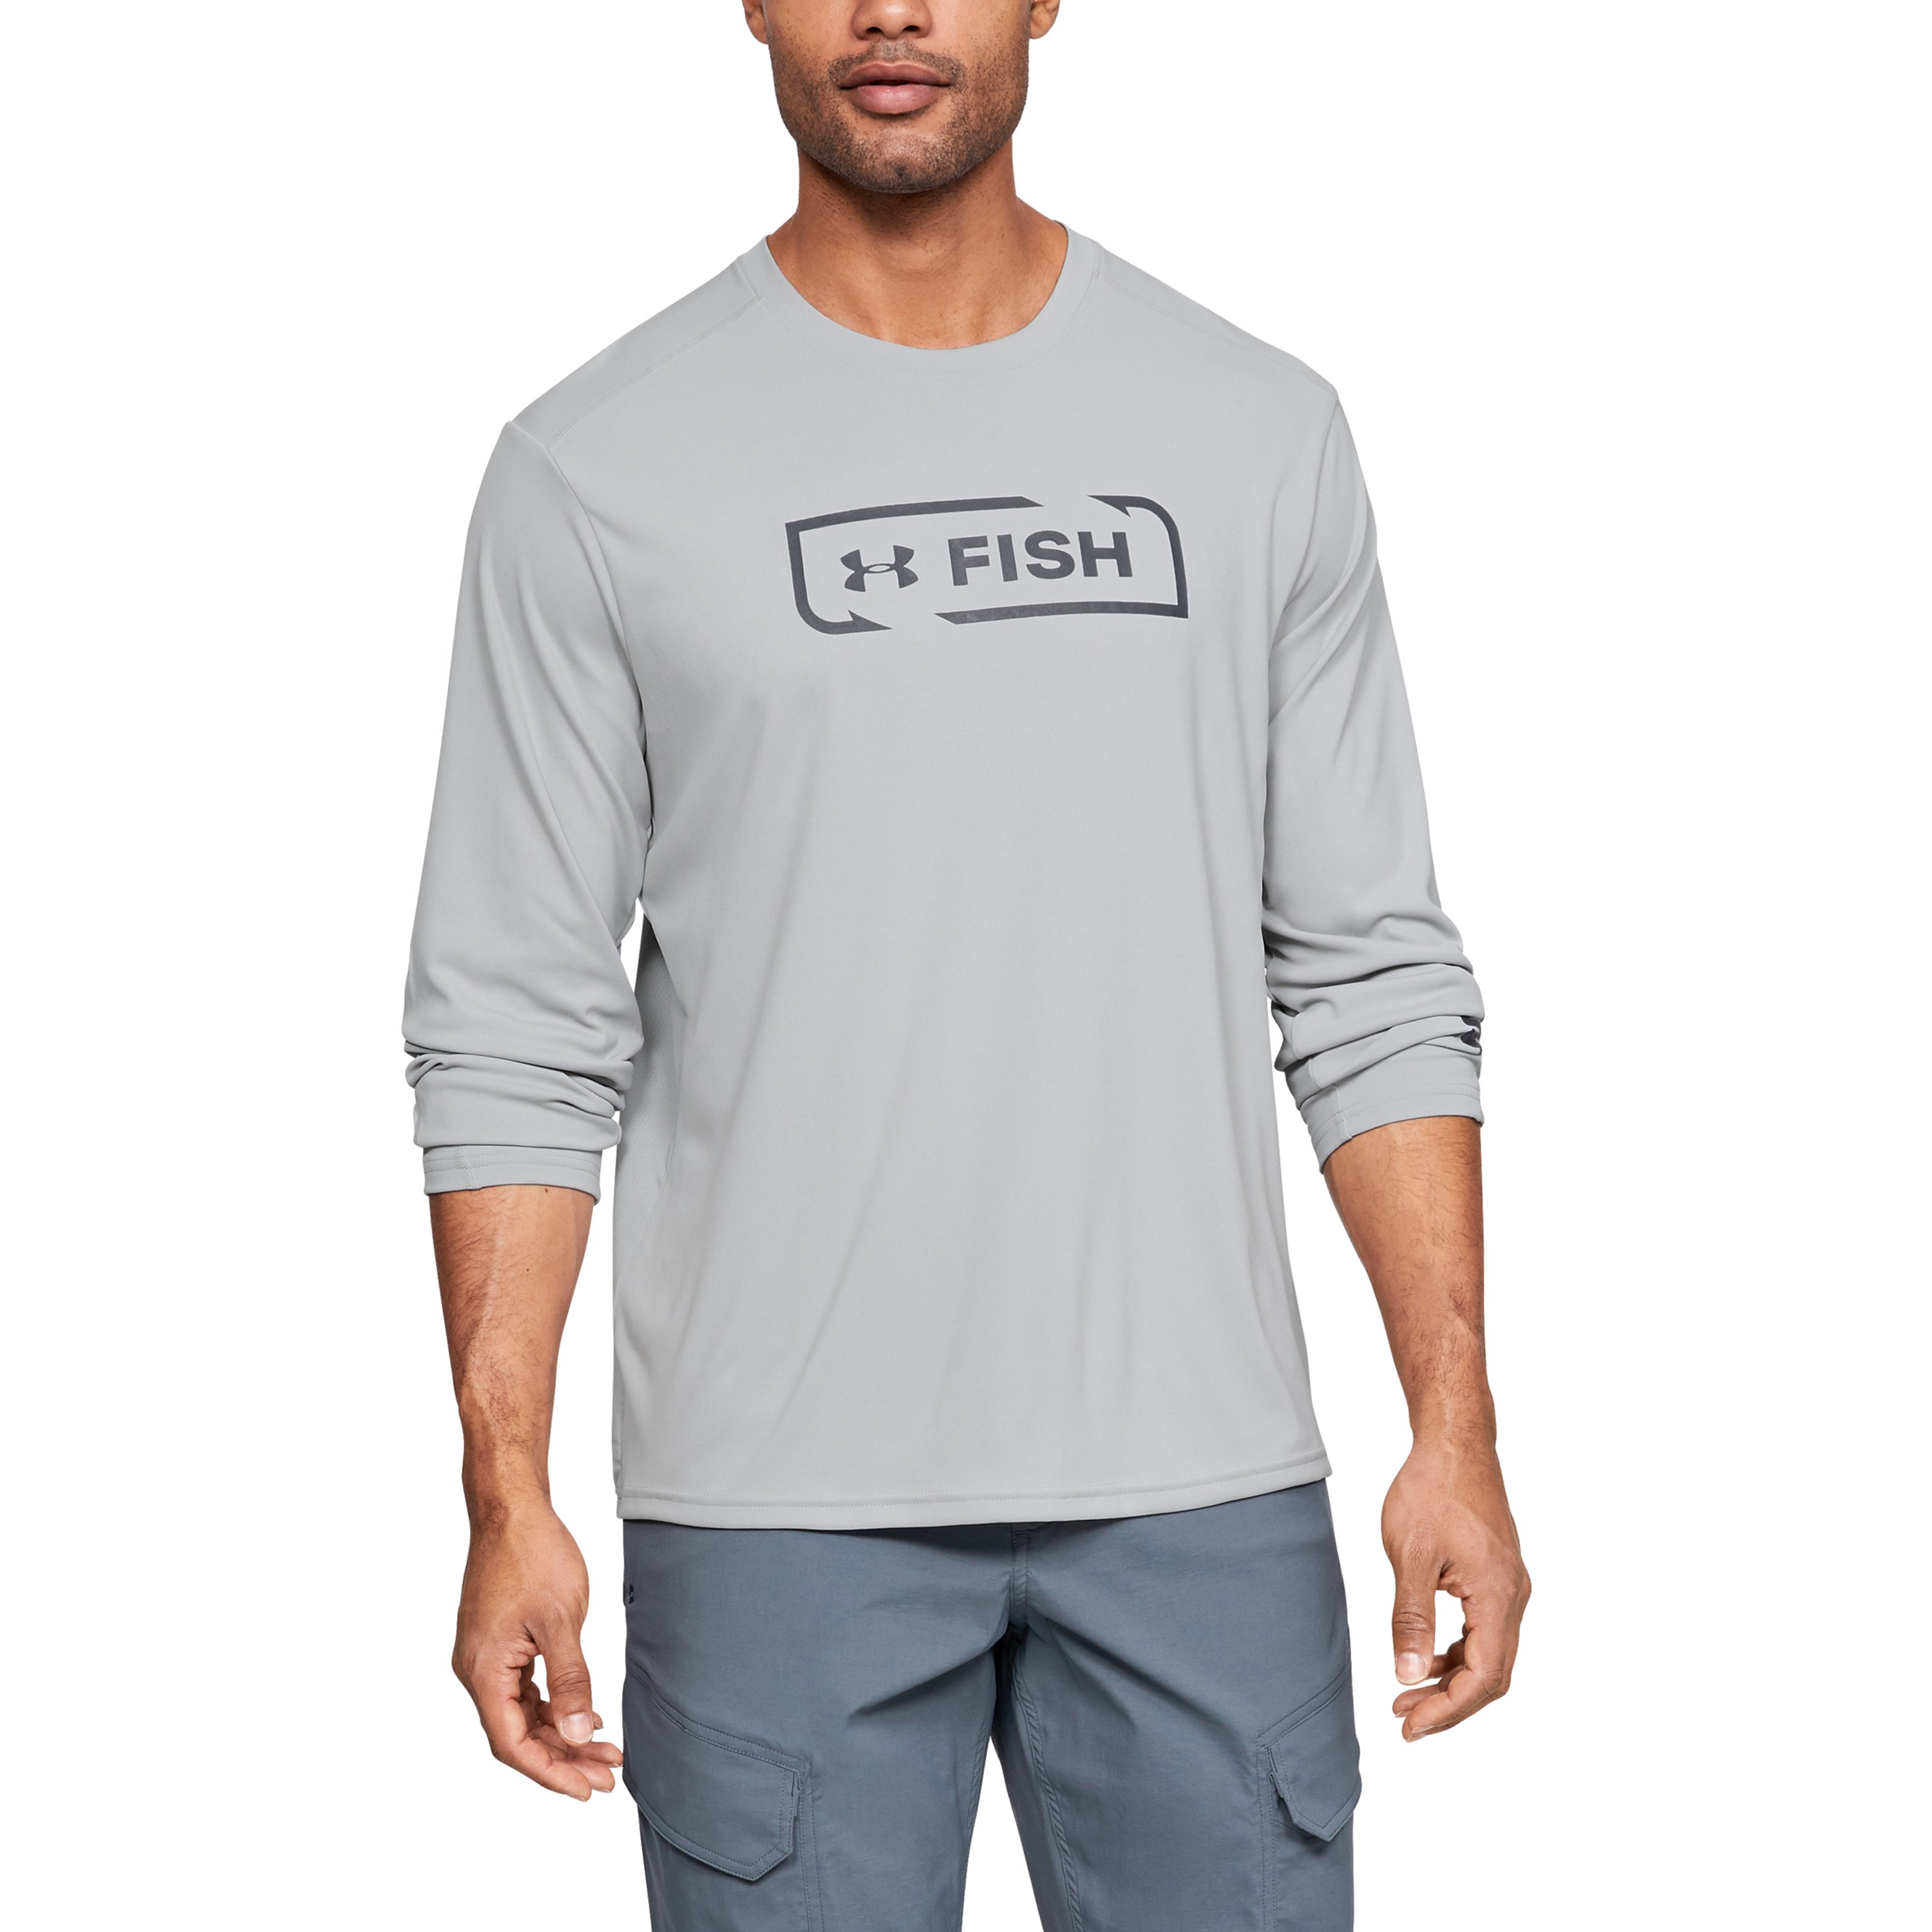 Under Armour® - Men's Shore Break Fishing Long Sleeve T-Shirt